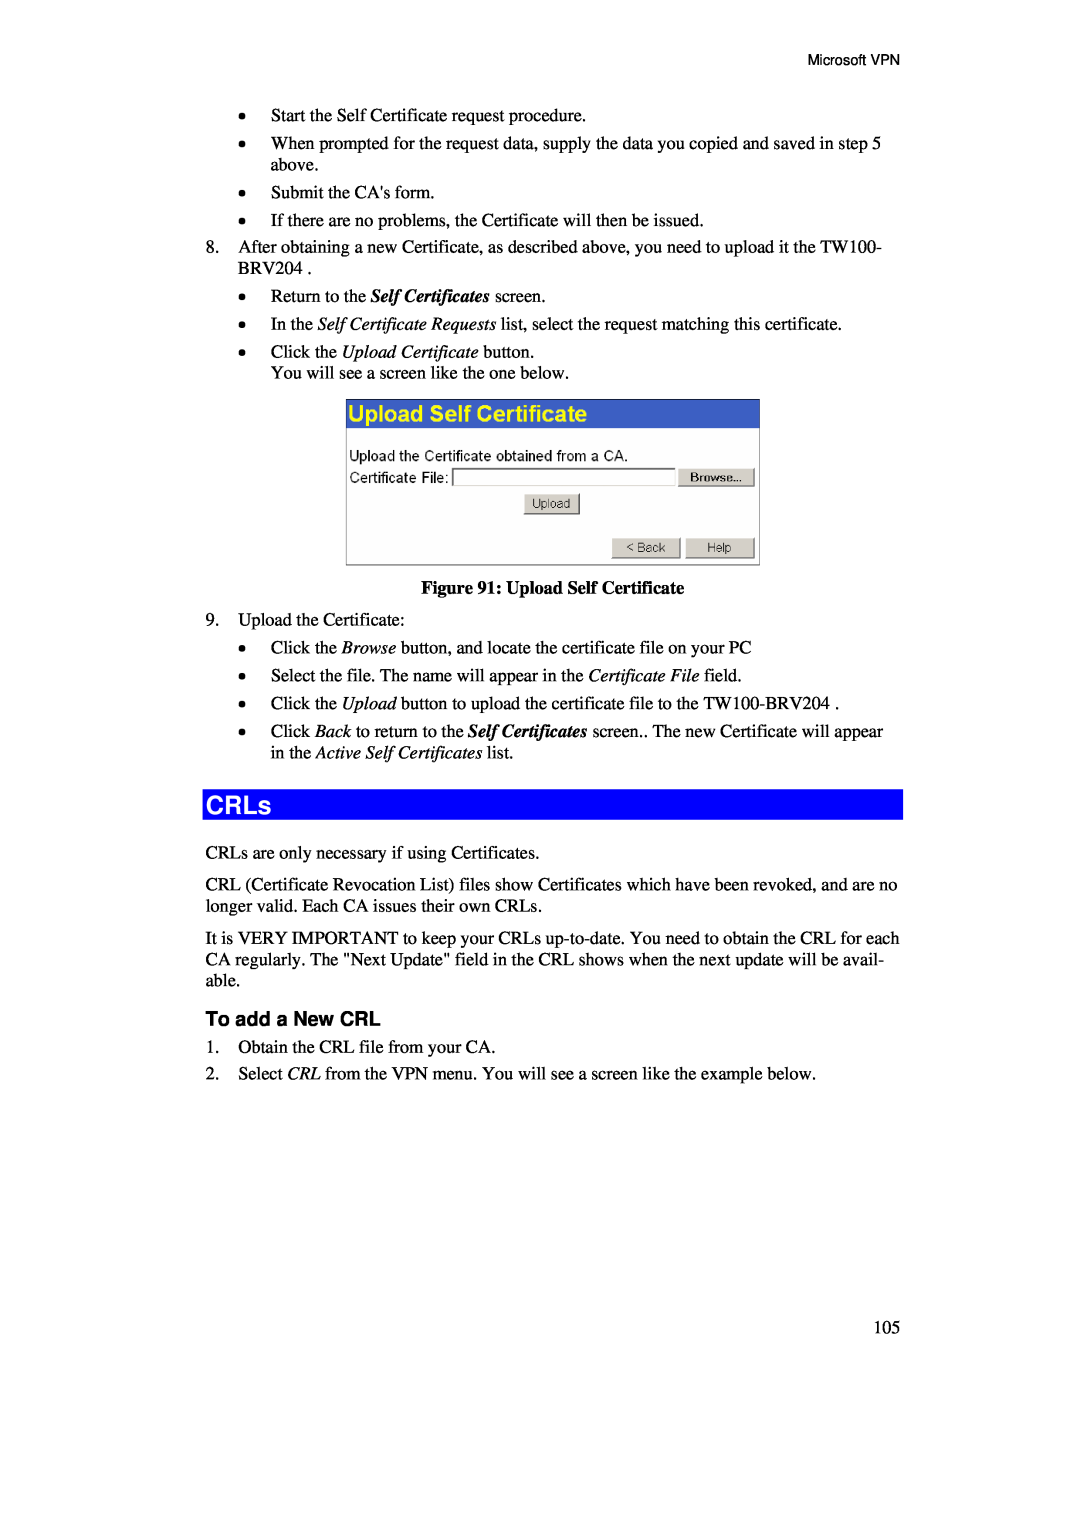 TRENDnet BRV204 manual CRLs, To add a New CRL, Upload Self Certificate 